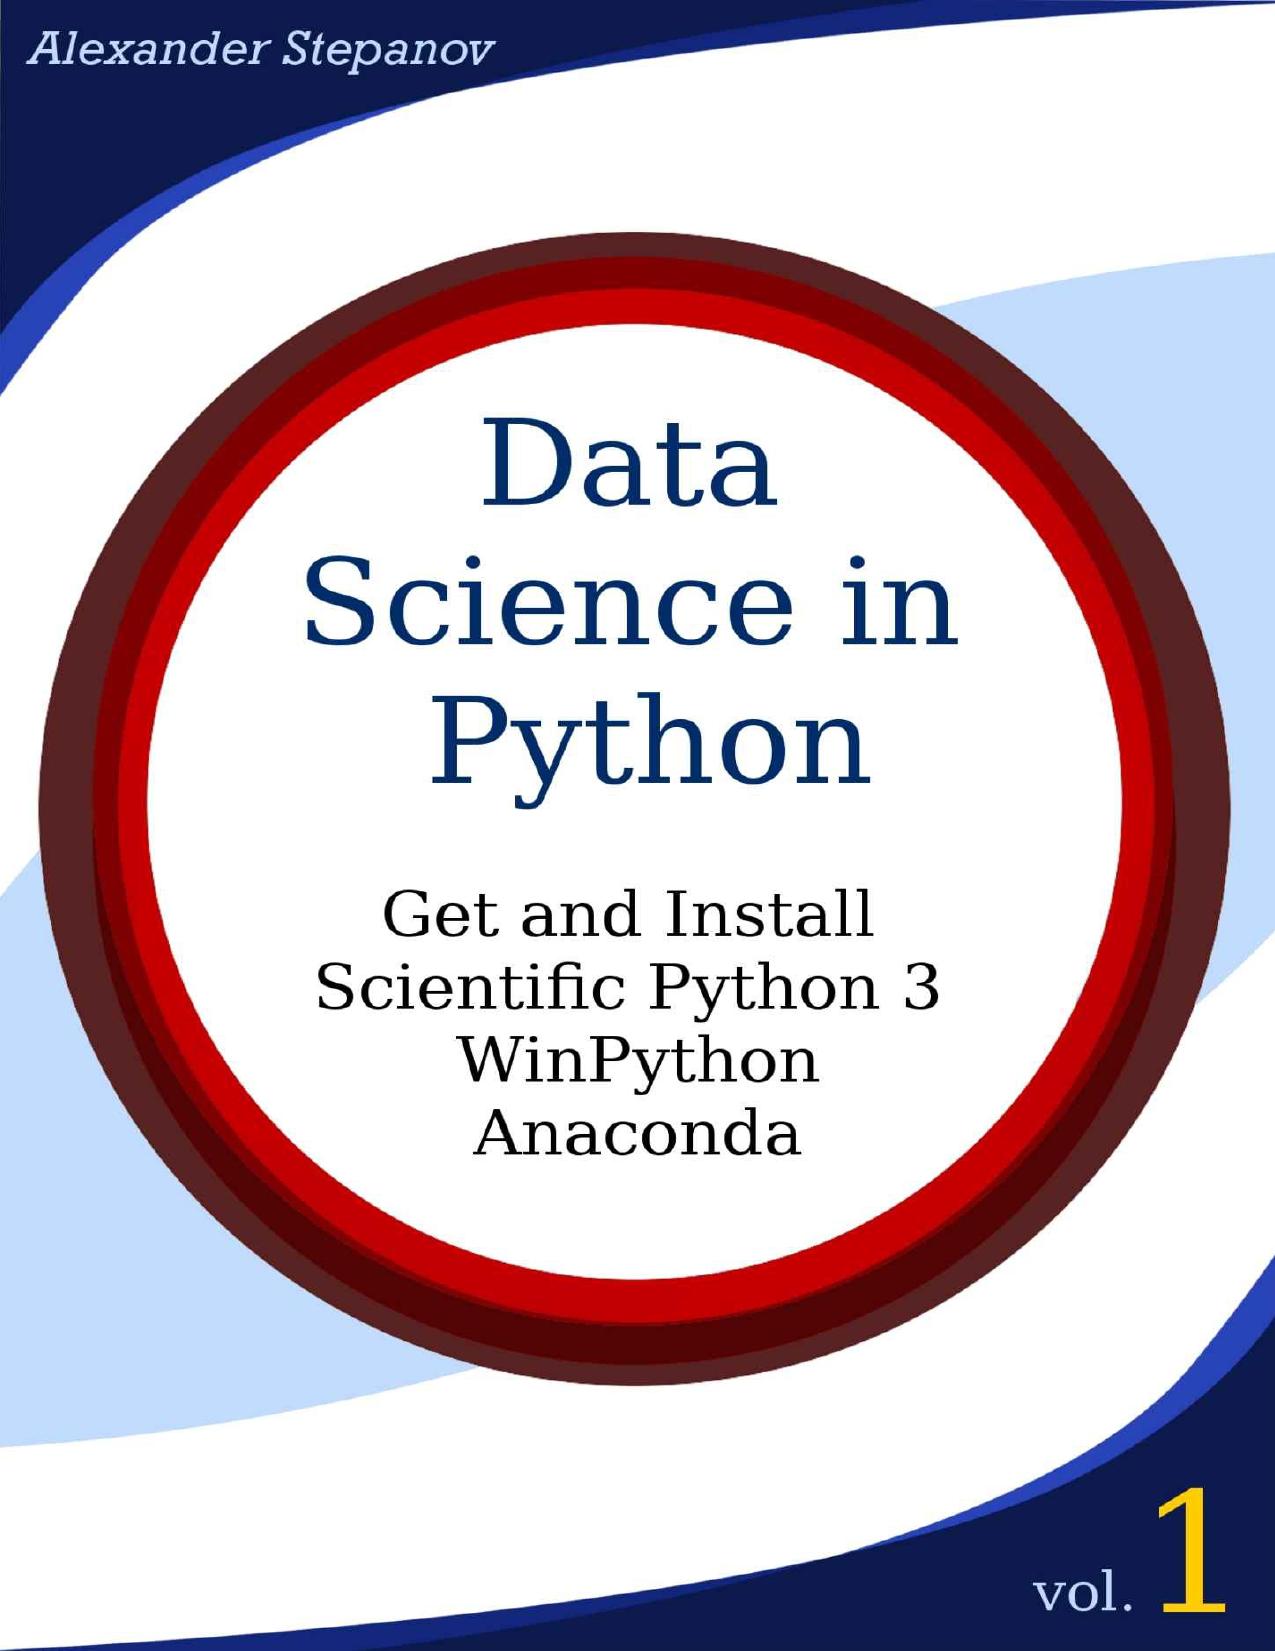 Data Science in Python. Volume 1: Get and Install Scientific Python3: WinPython, Anaconda by Alexander Stepanov